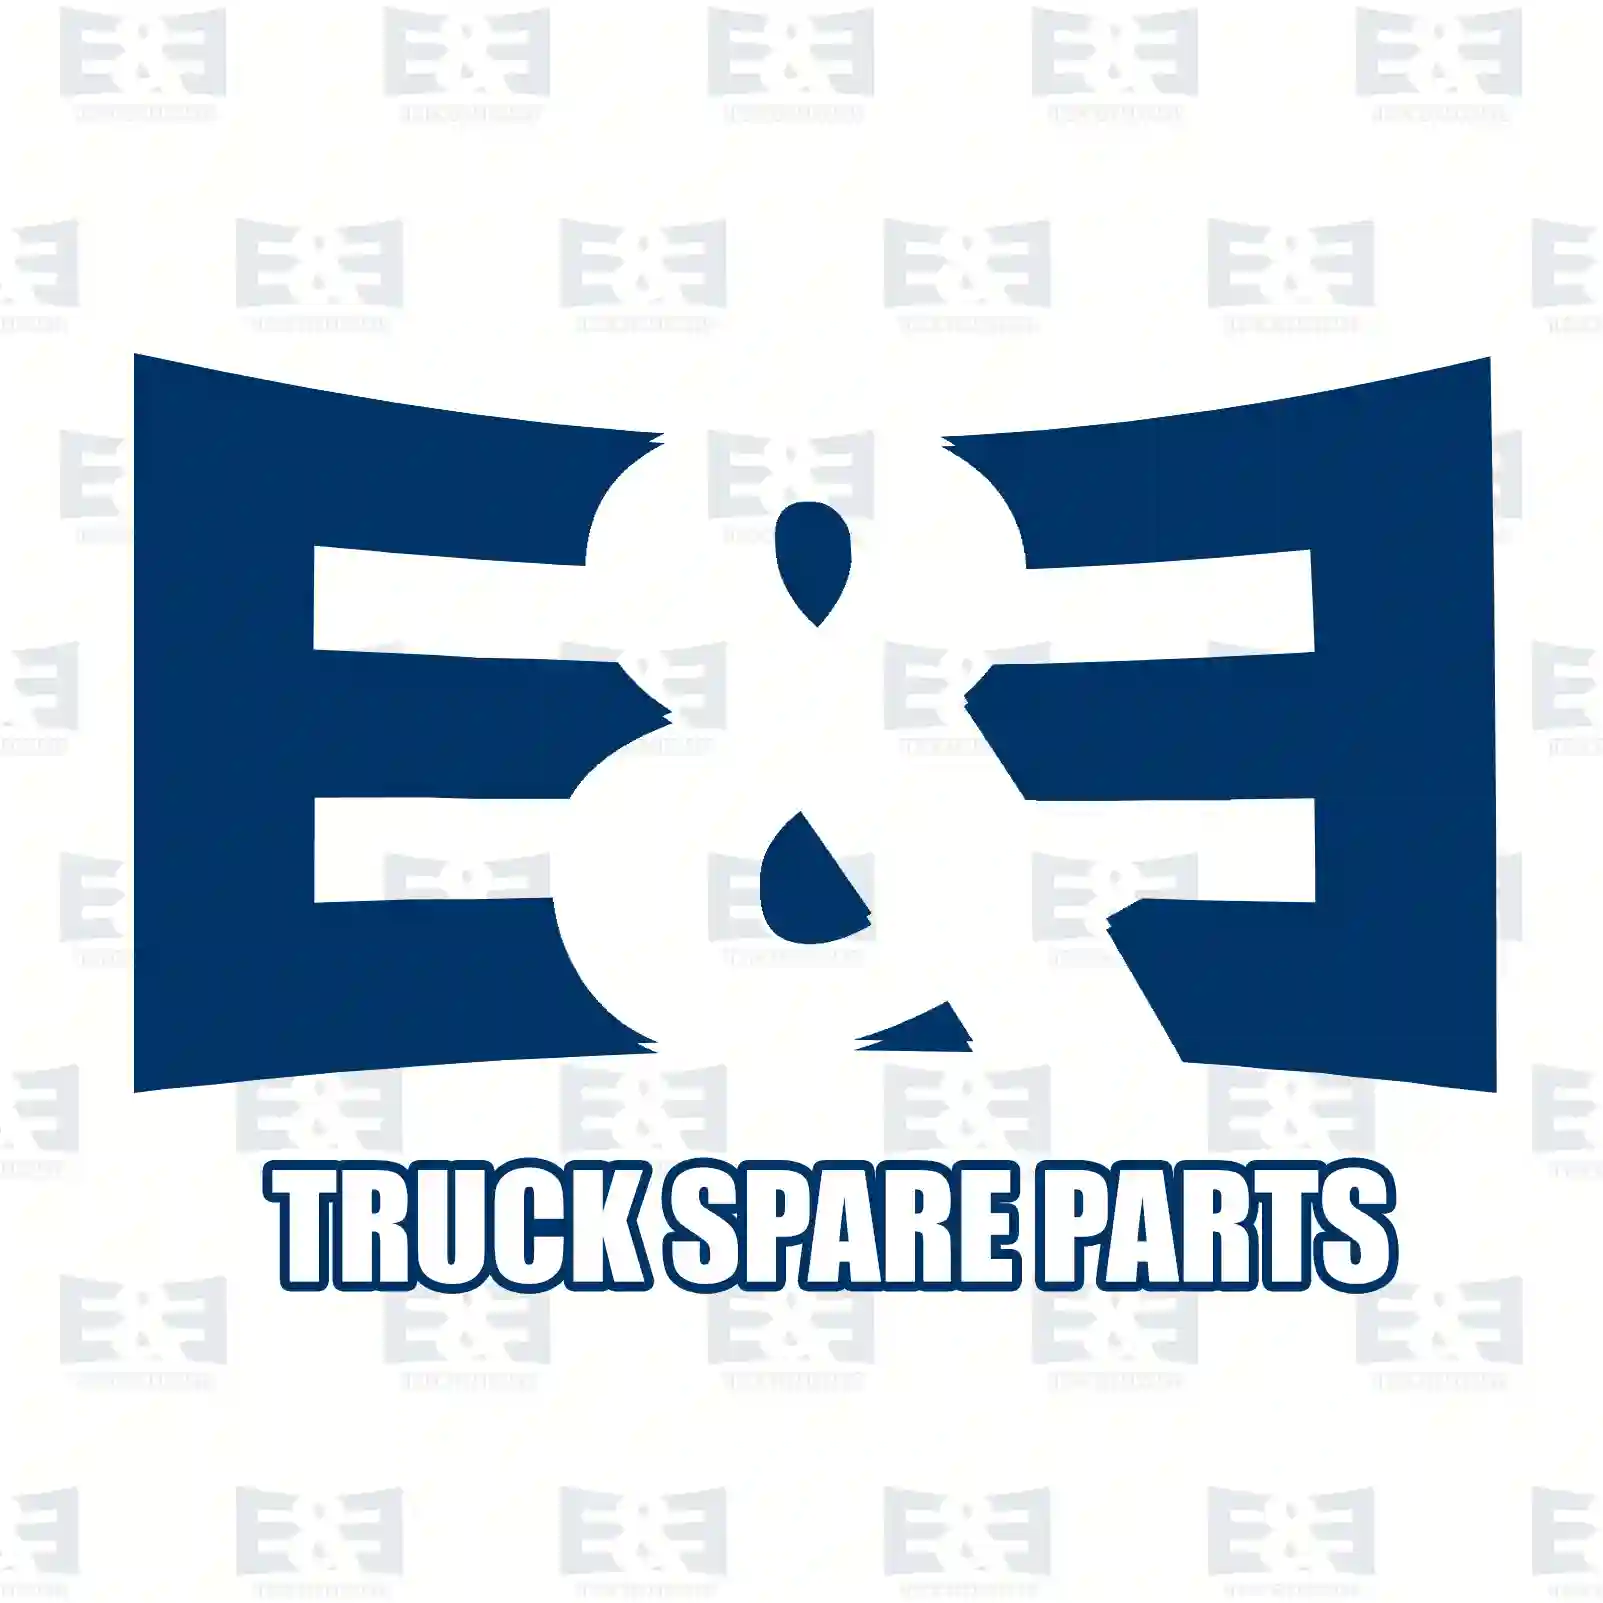 Ball joint, right hand thread, 2E2278018, 1668179, 1669010, ZG40141-0008 ||  2E2278018 E&E Truck Spare Parts | Truck Spare Parts, Auotomotive Spare Parts Ball joint, right hand thread, 2E2278018, 1668179, 1669010, ZG40141-0008 ||  2E2278018 E&E Truck Spare Parts | Truck Spare Parts, Auotomotive Spare Parts